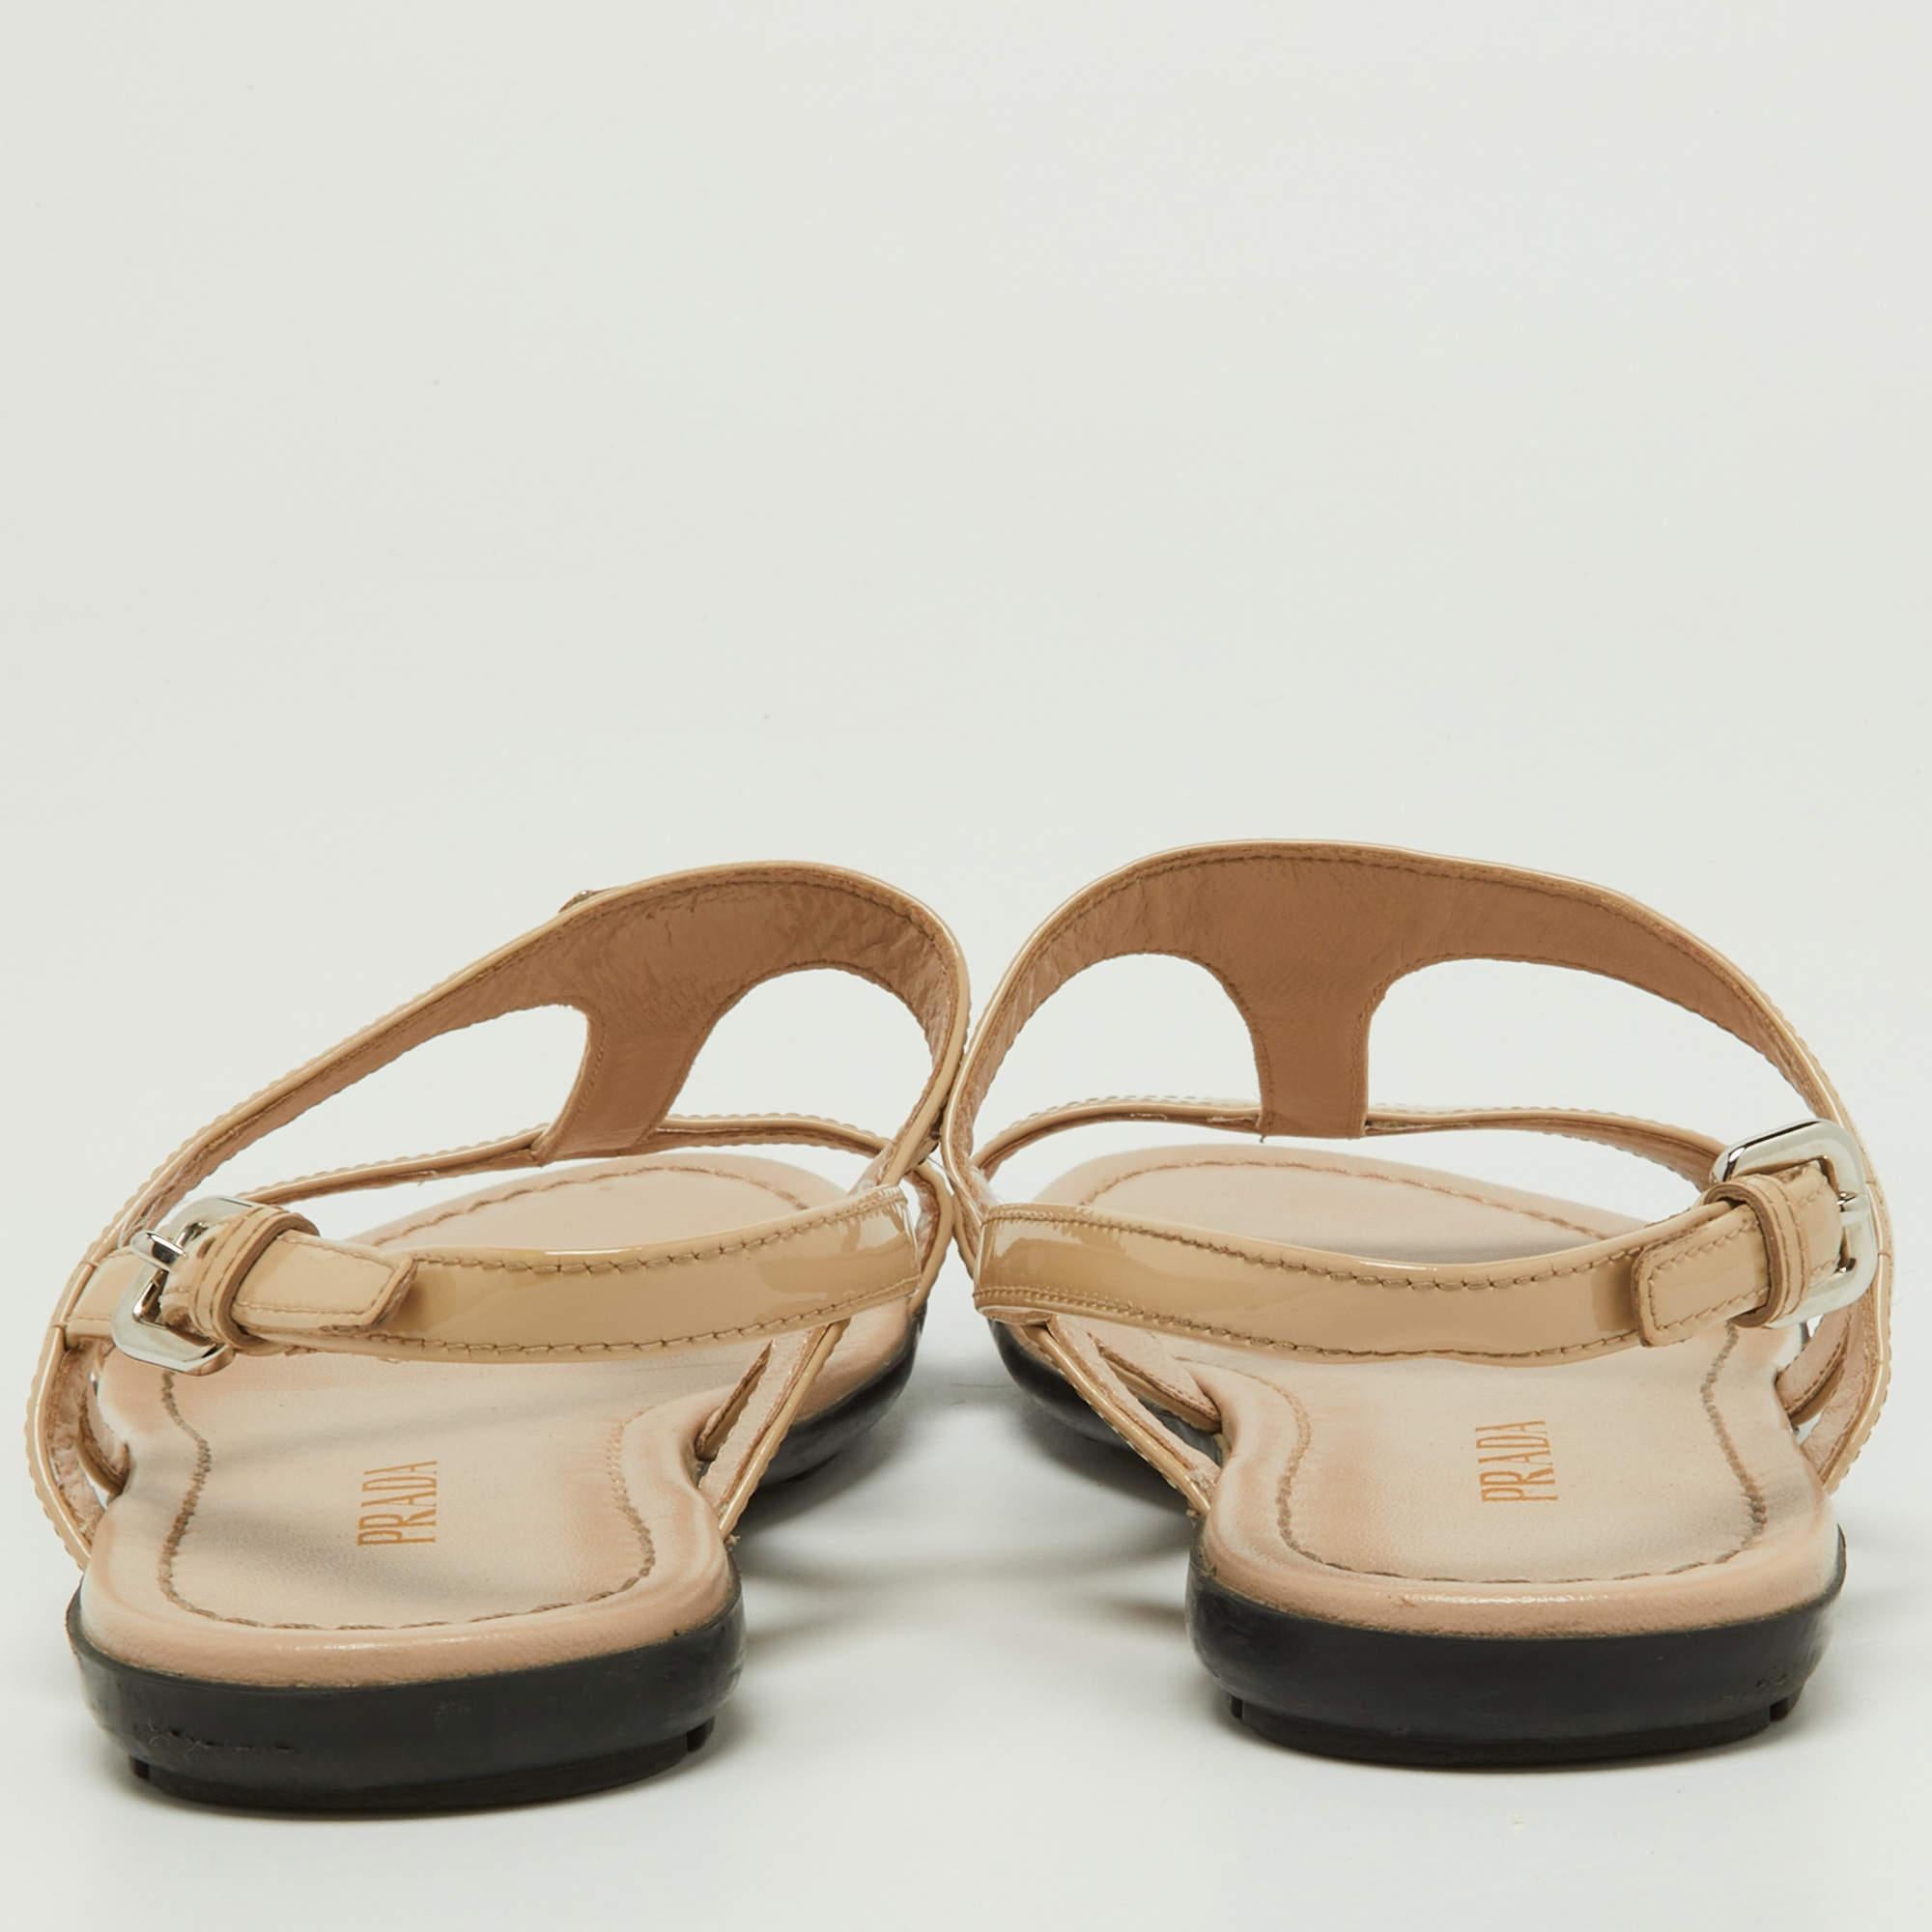 Prada Beige Patent Leather Flat Sandals Size 39 2